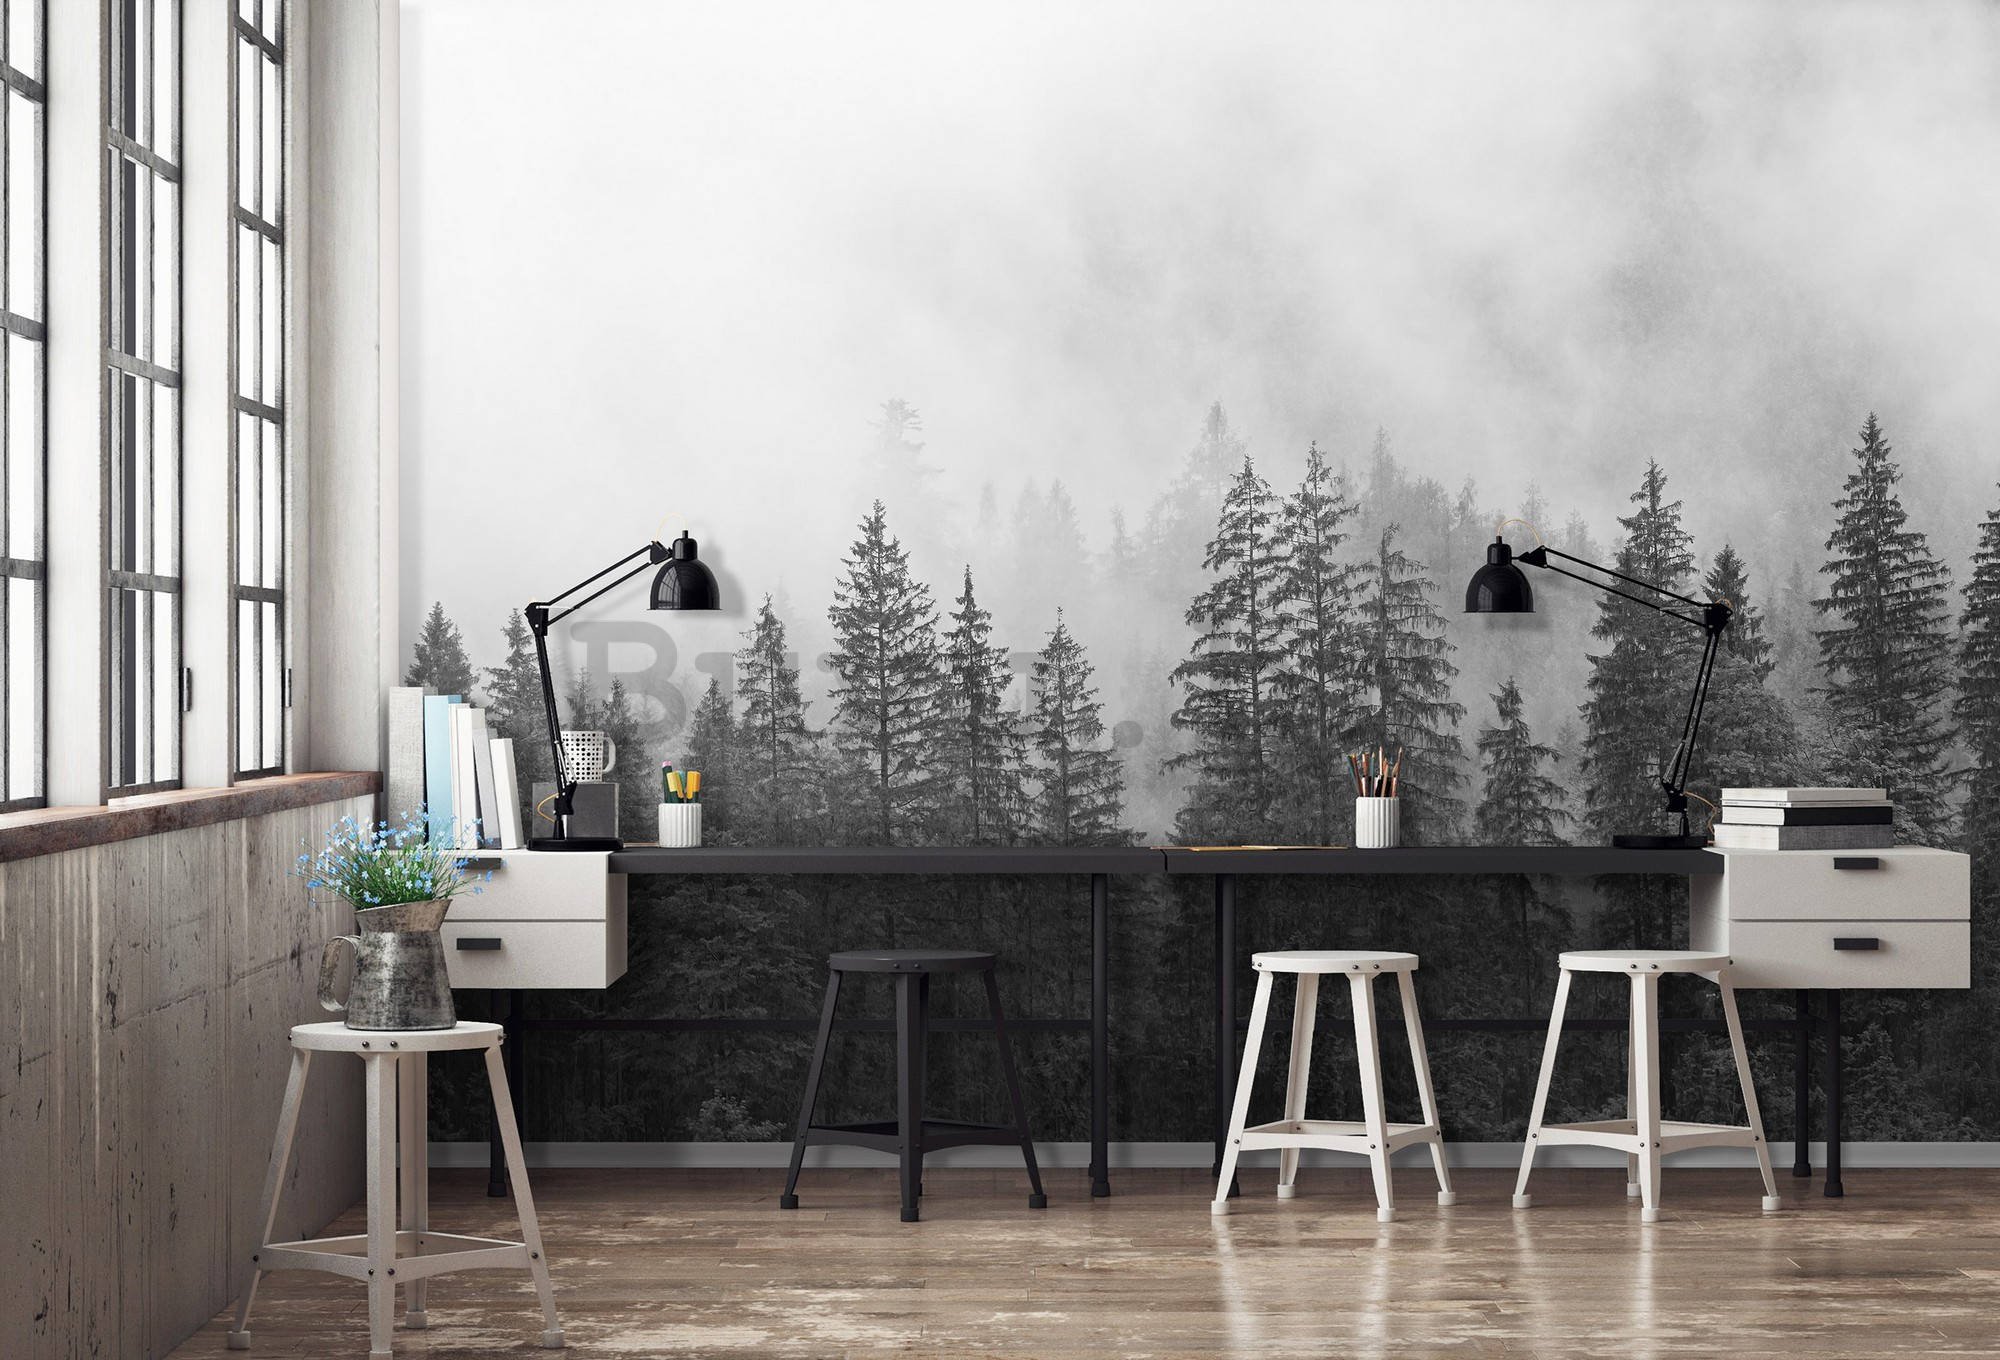 Vlies foto tapeta: Magla nad crno-bijelom šumom  - 368x254 cm